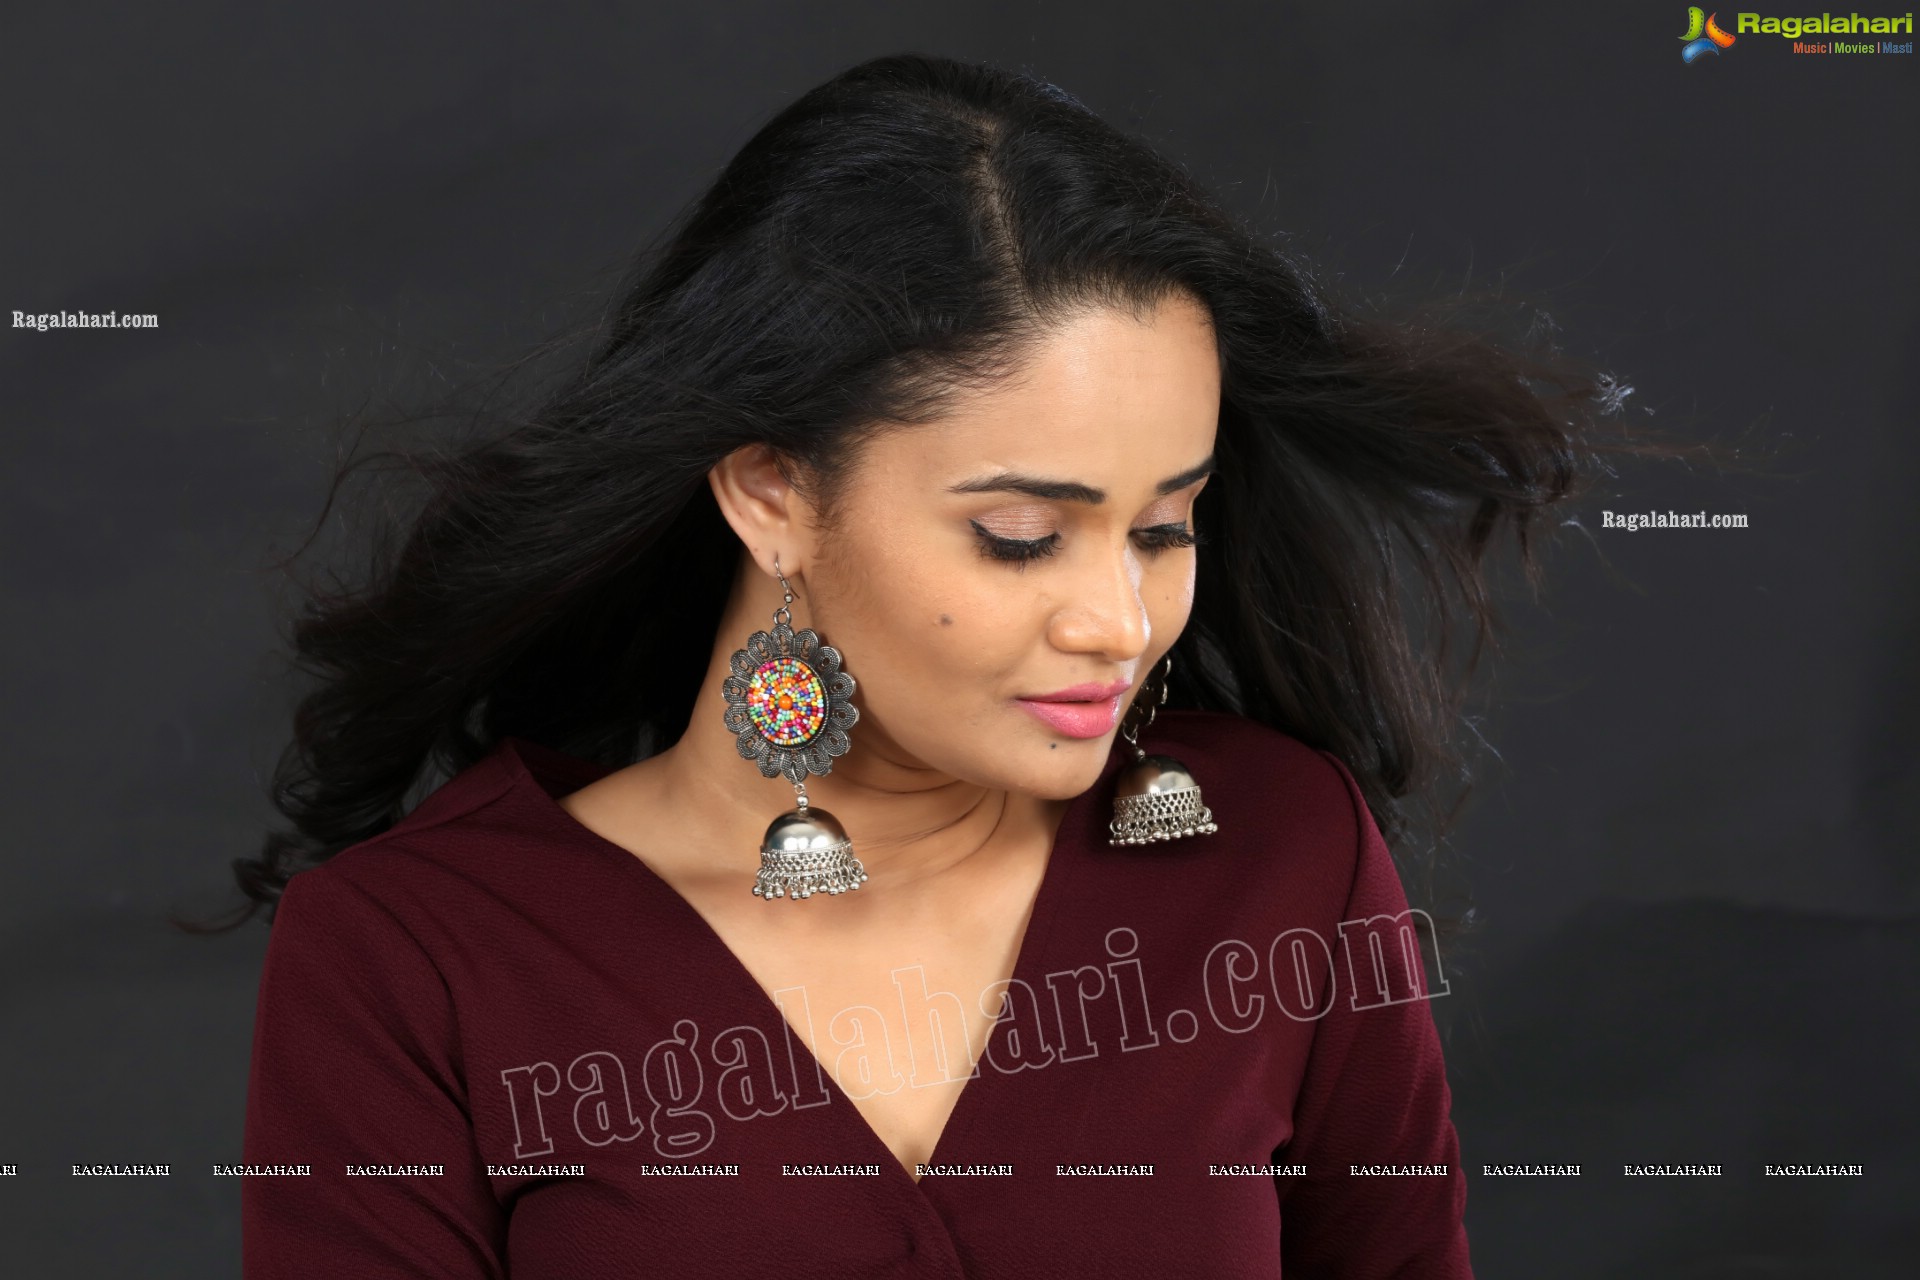 Usha Kurapati in Burgundy Mini Dress, Exclusive Photoshoot